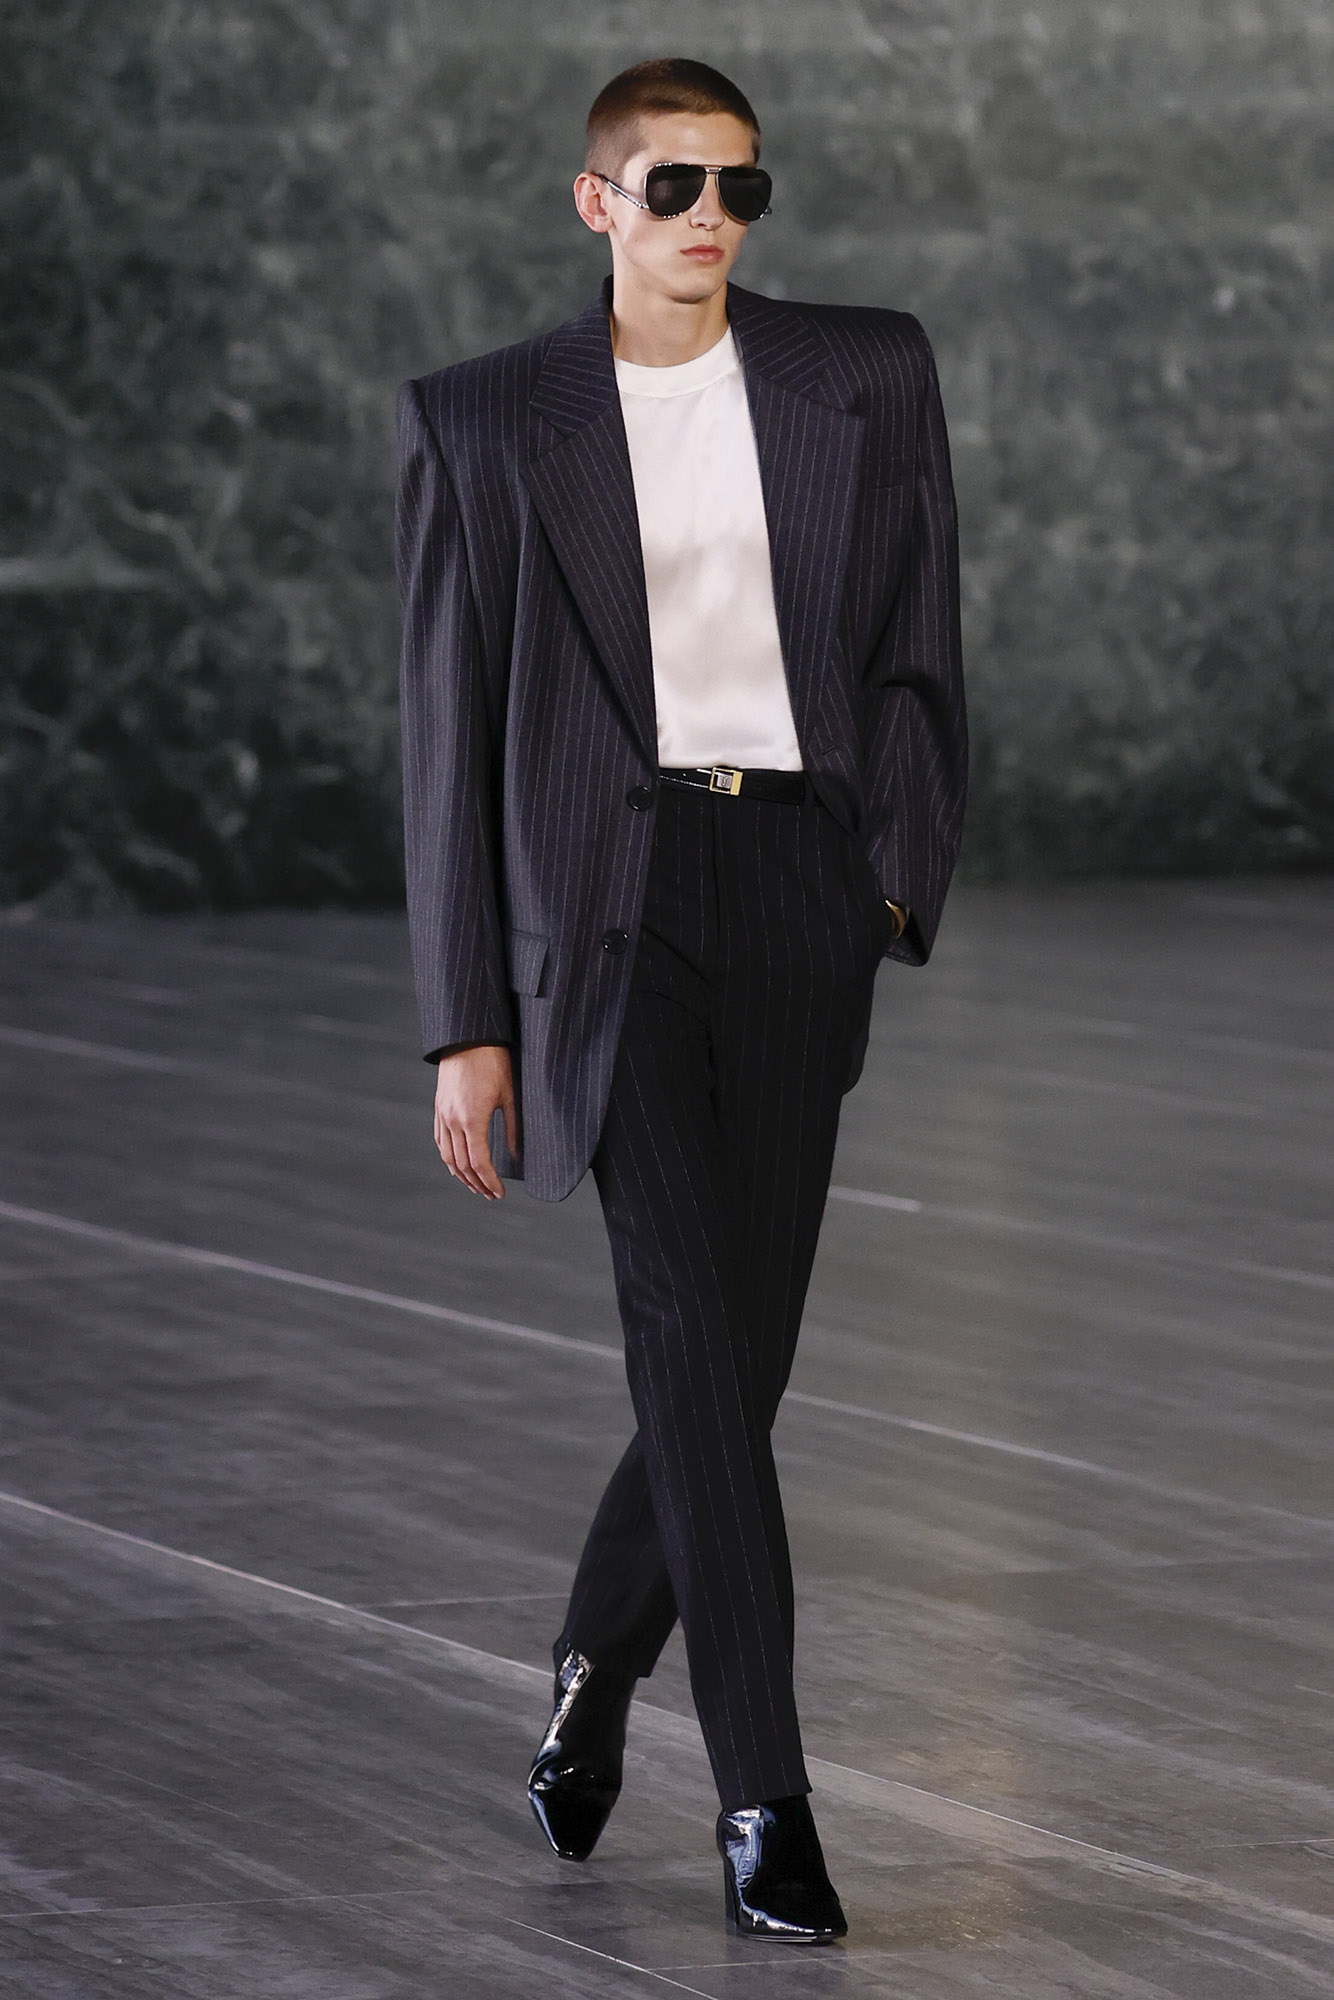 Saint Laurent Spring/Summer 2024 male model in suit on runway